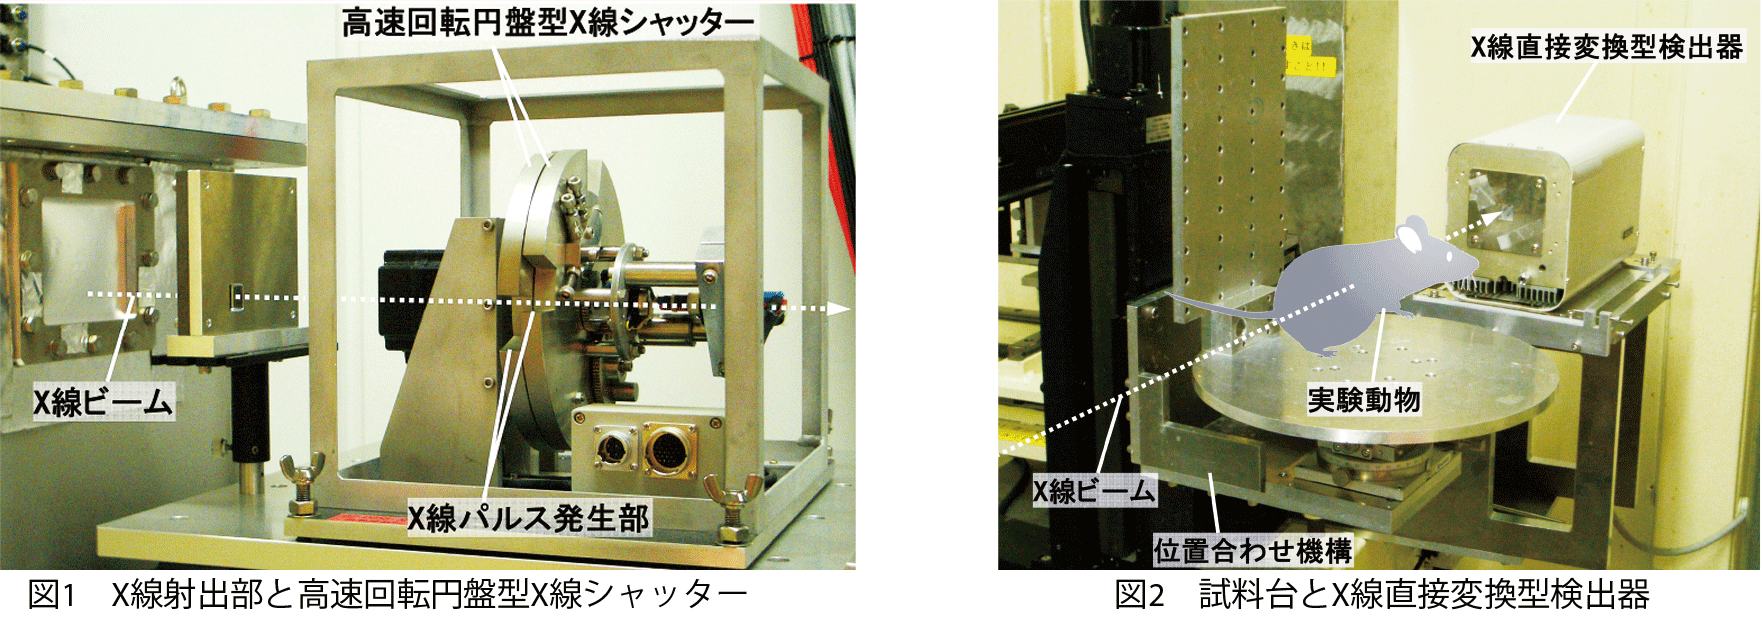 図1 X線射出部と高速回転円盤型X線シャッター、図2 試料台とX線直接変換型検出器